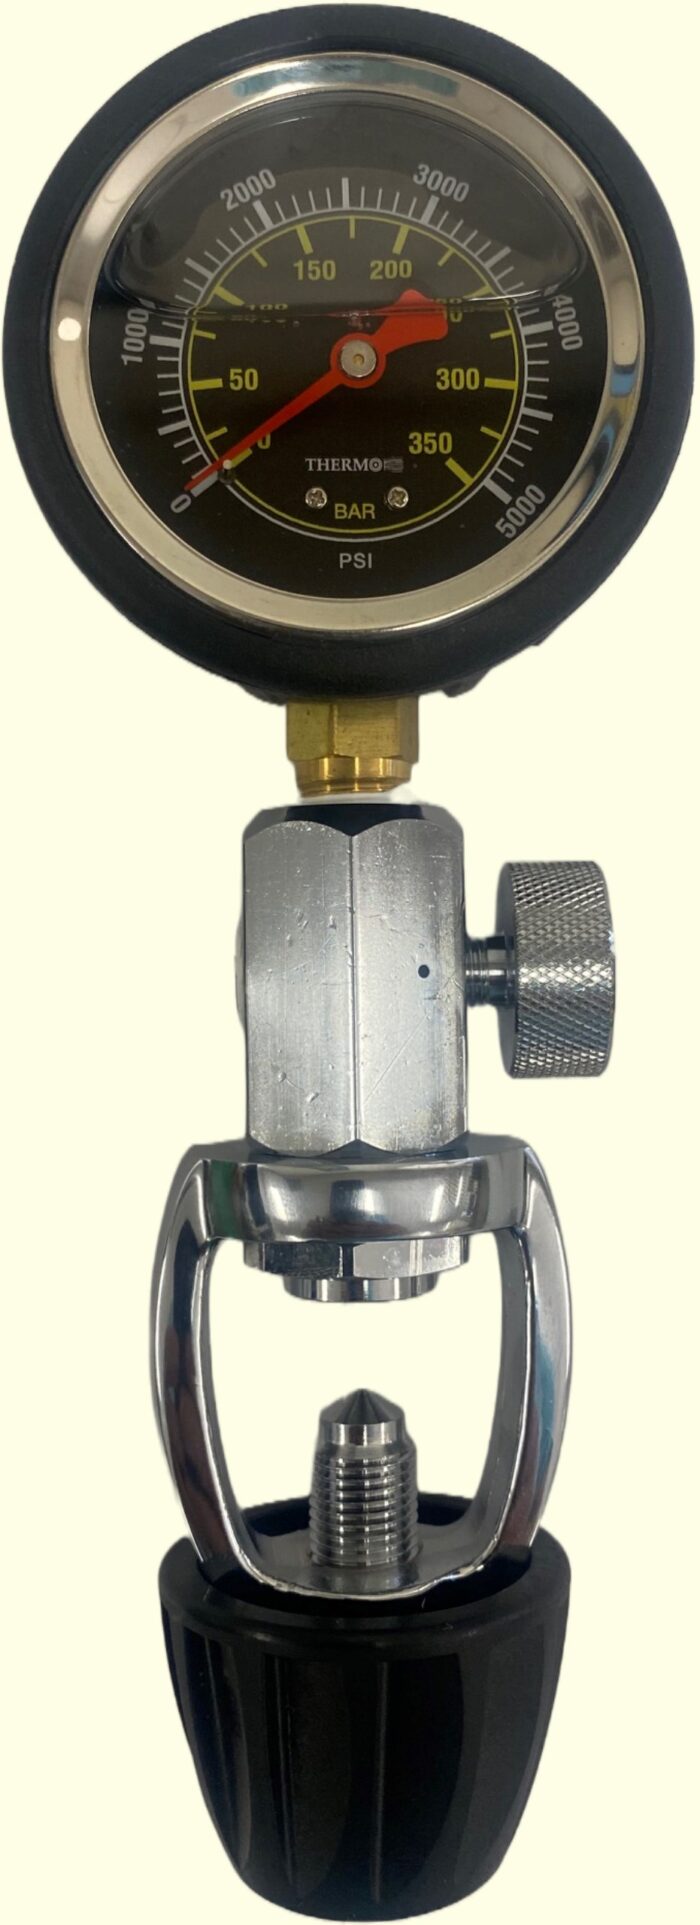 A pressure gauge close-up for SCUBA verification